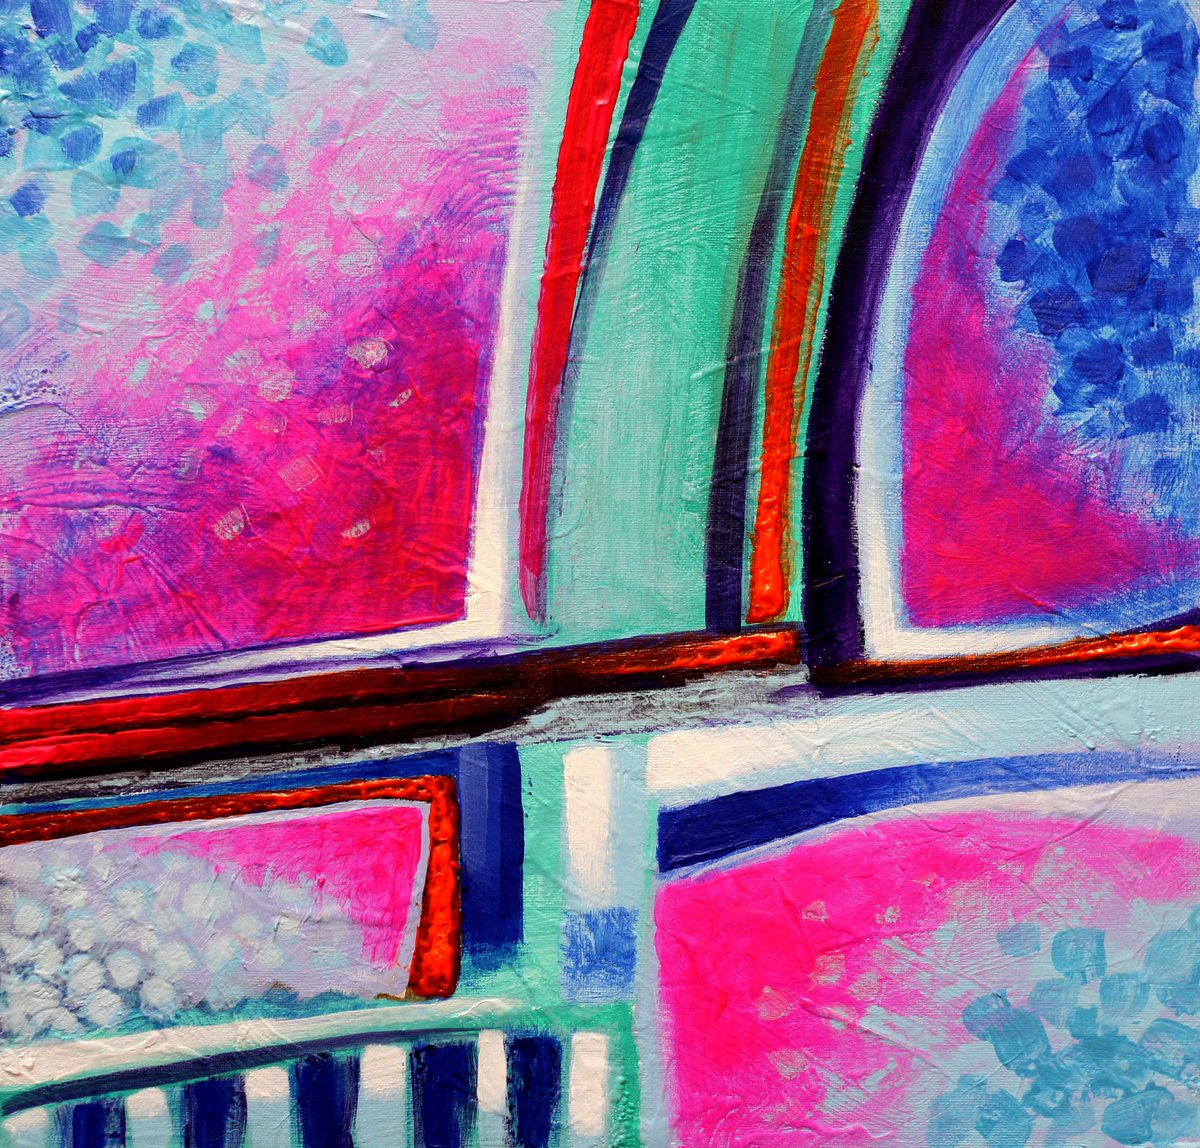 Dynamic Colour Scape - #abstraction #artsale #abstractartwork #studiovisit #drumcondra #opengallery #galleryart john@nolanart.com